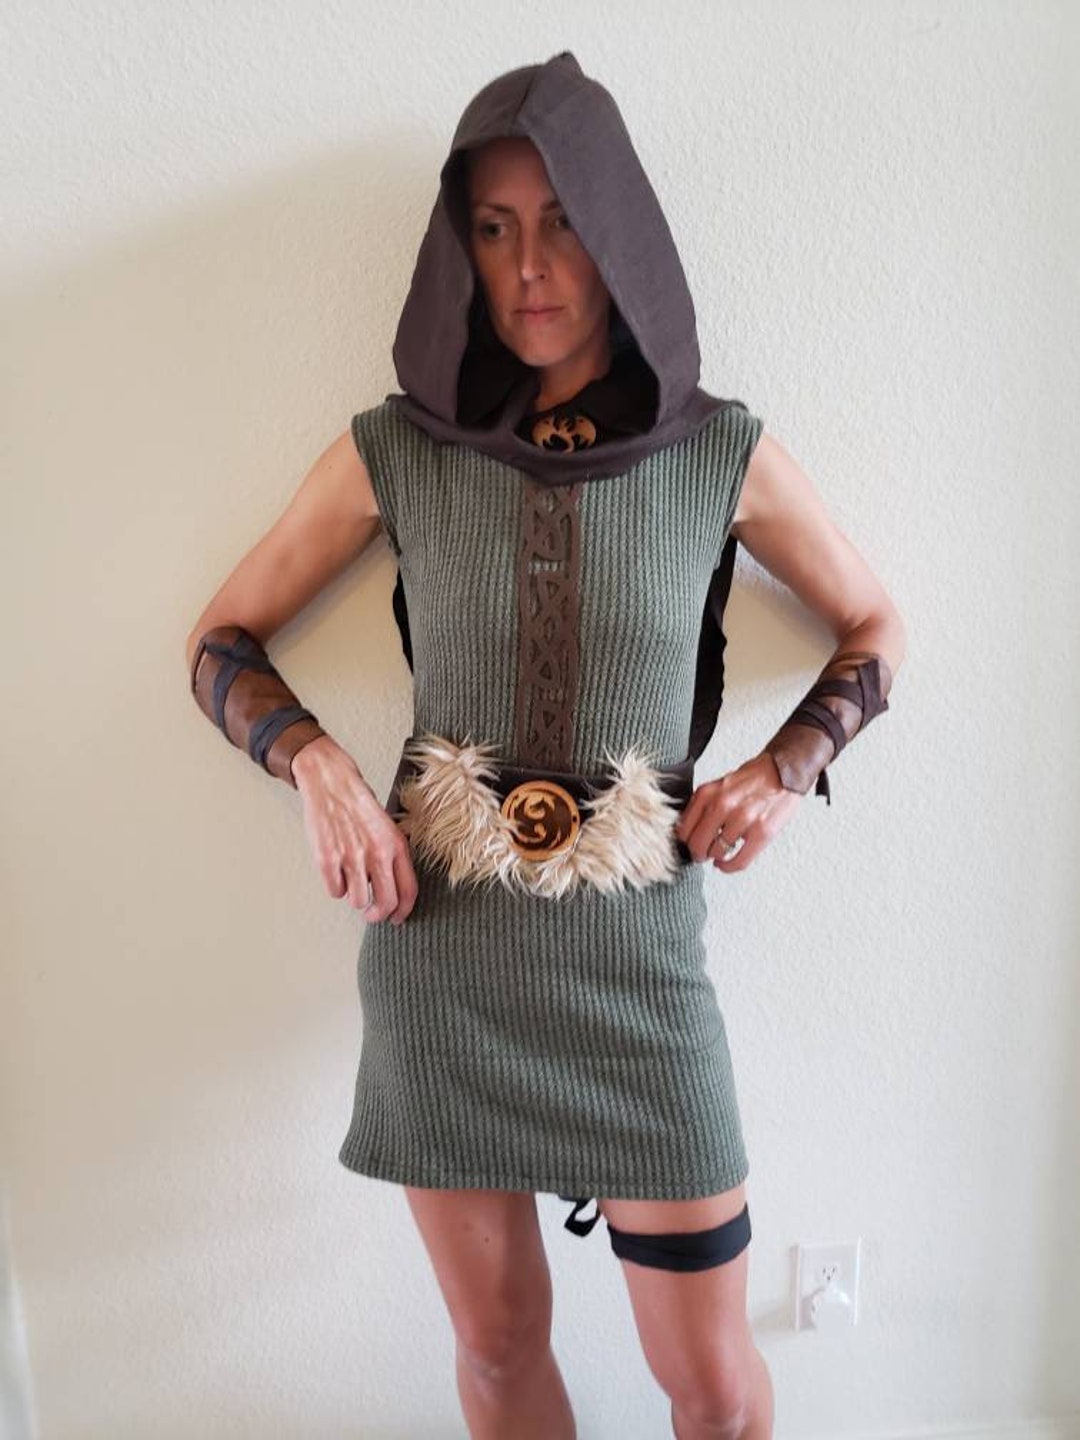 Viking Warrior, Girl Viking Warrior, Girl Halloween Costume, Viking  Cosplay, LARP Warrior Female Warrior, Girl Warrior, Girl Viking Costume 